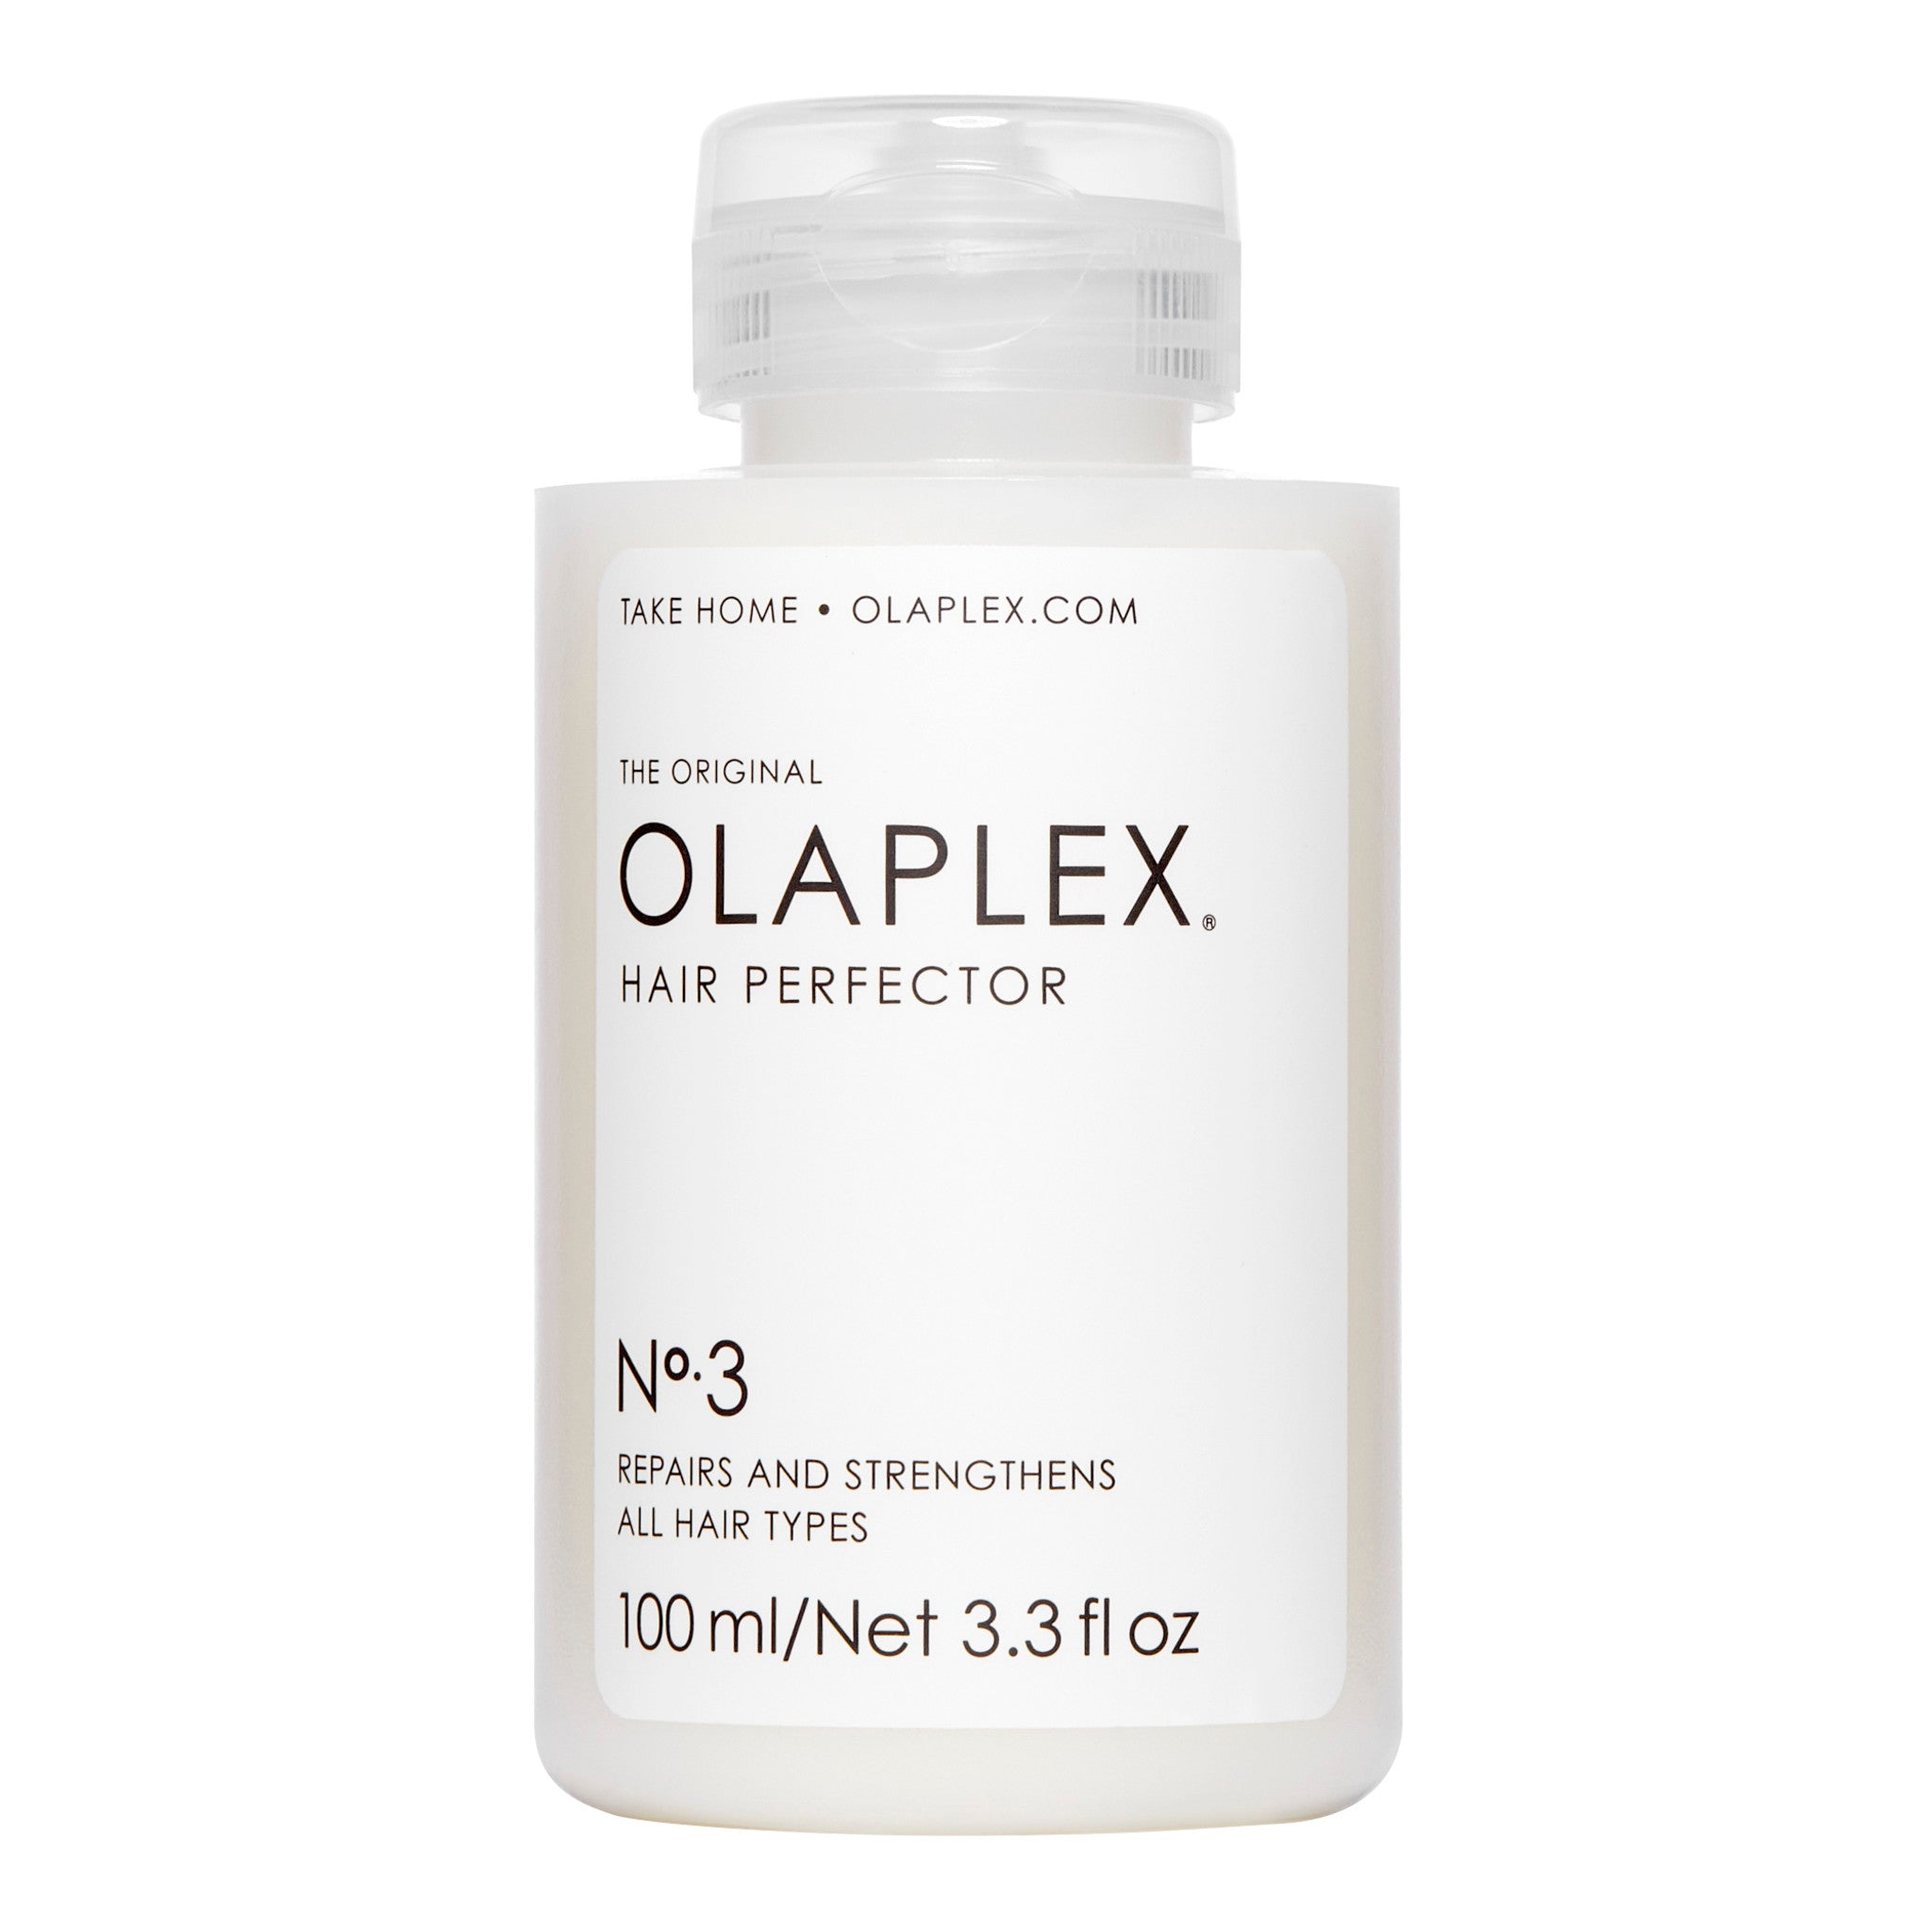 Olaplex No.3 Hair Perfector Size variant: 3.3 fl oz | 100 ml main image. This product is for black hair